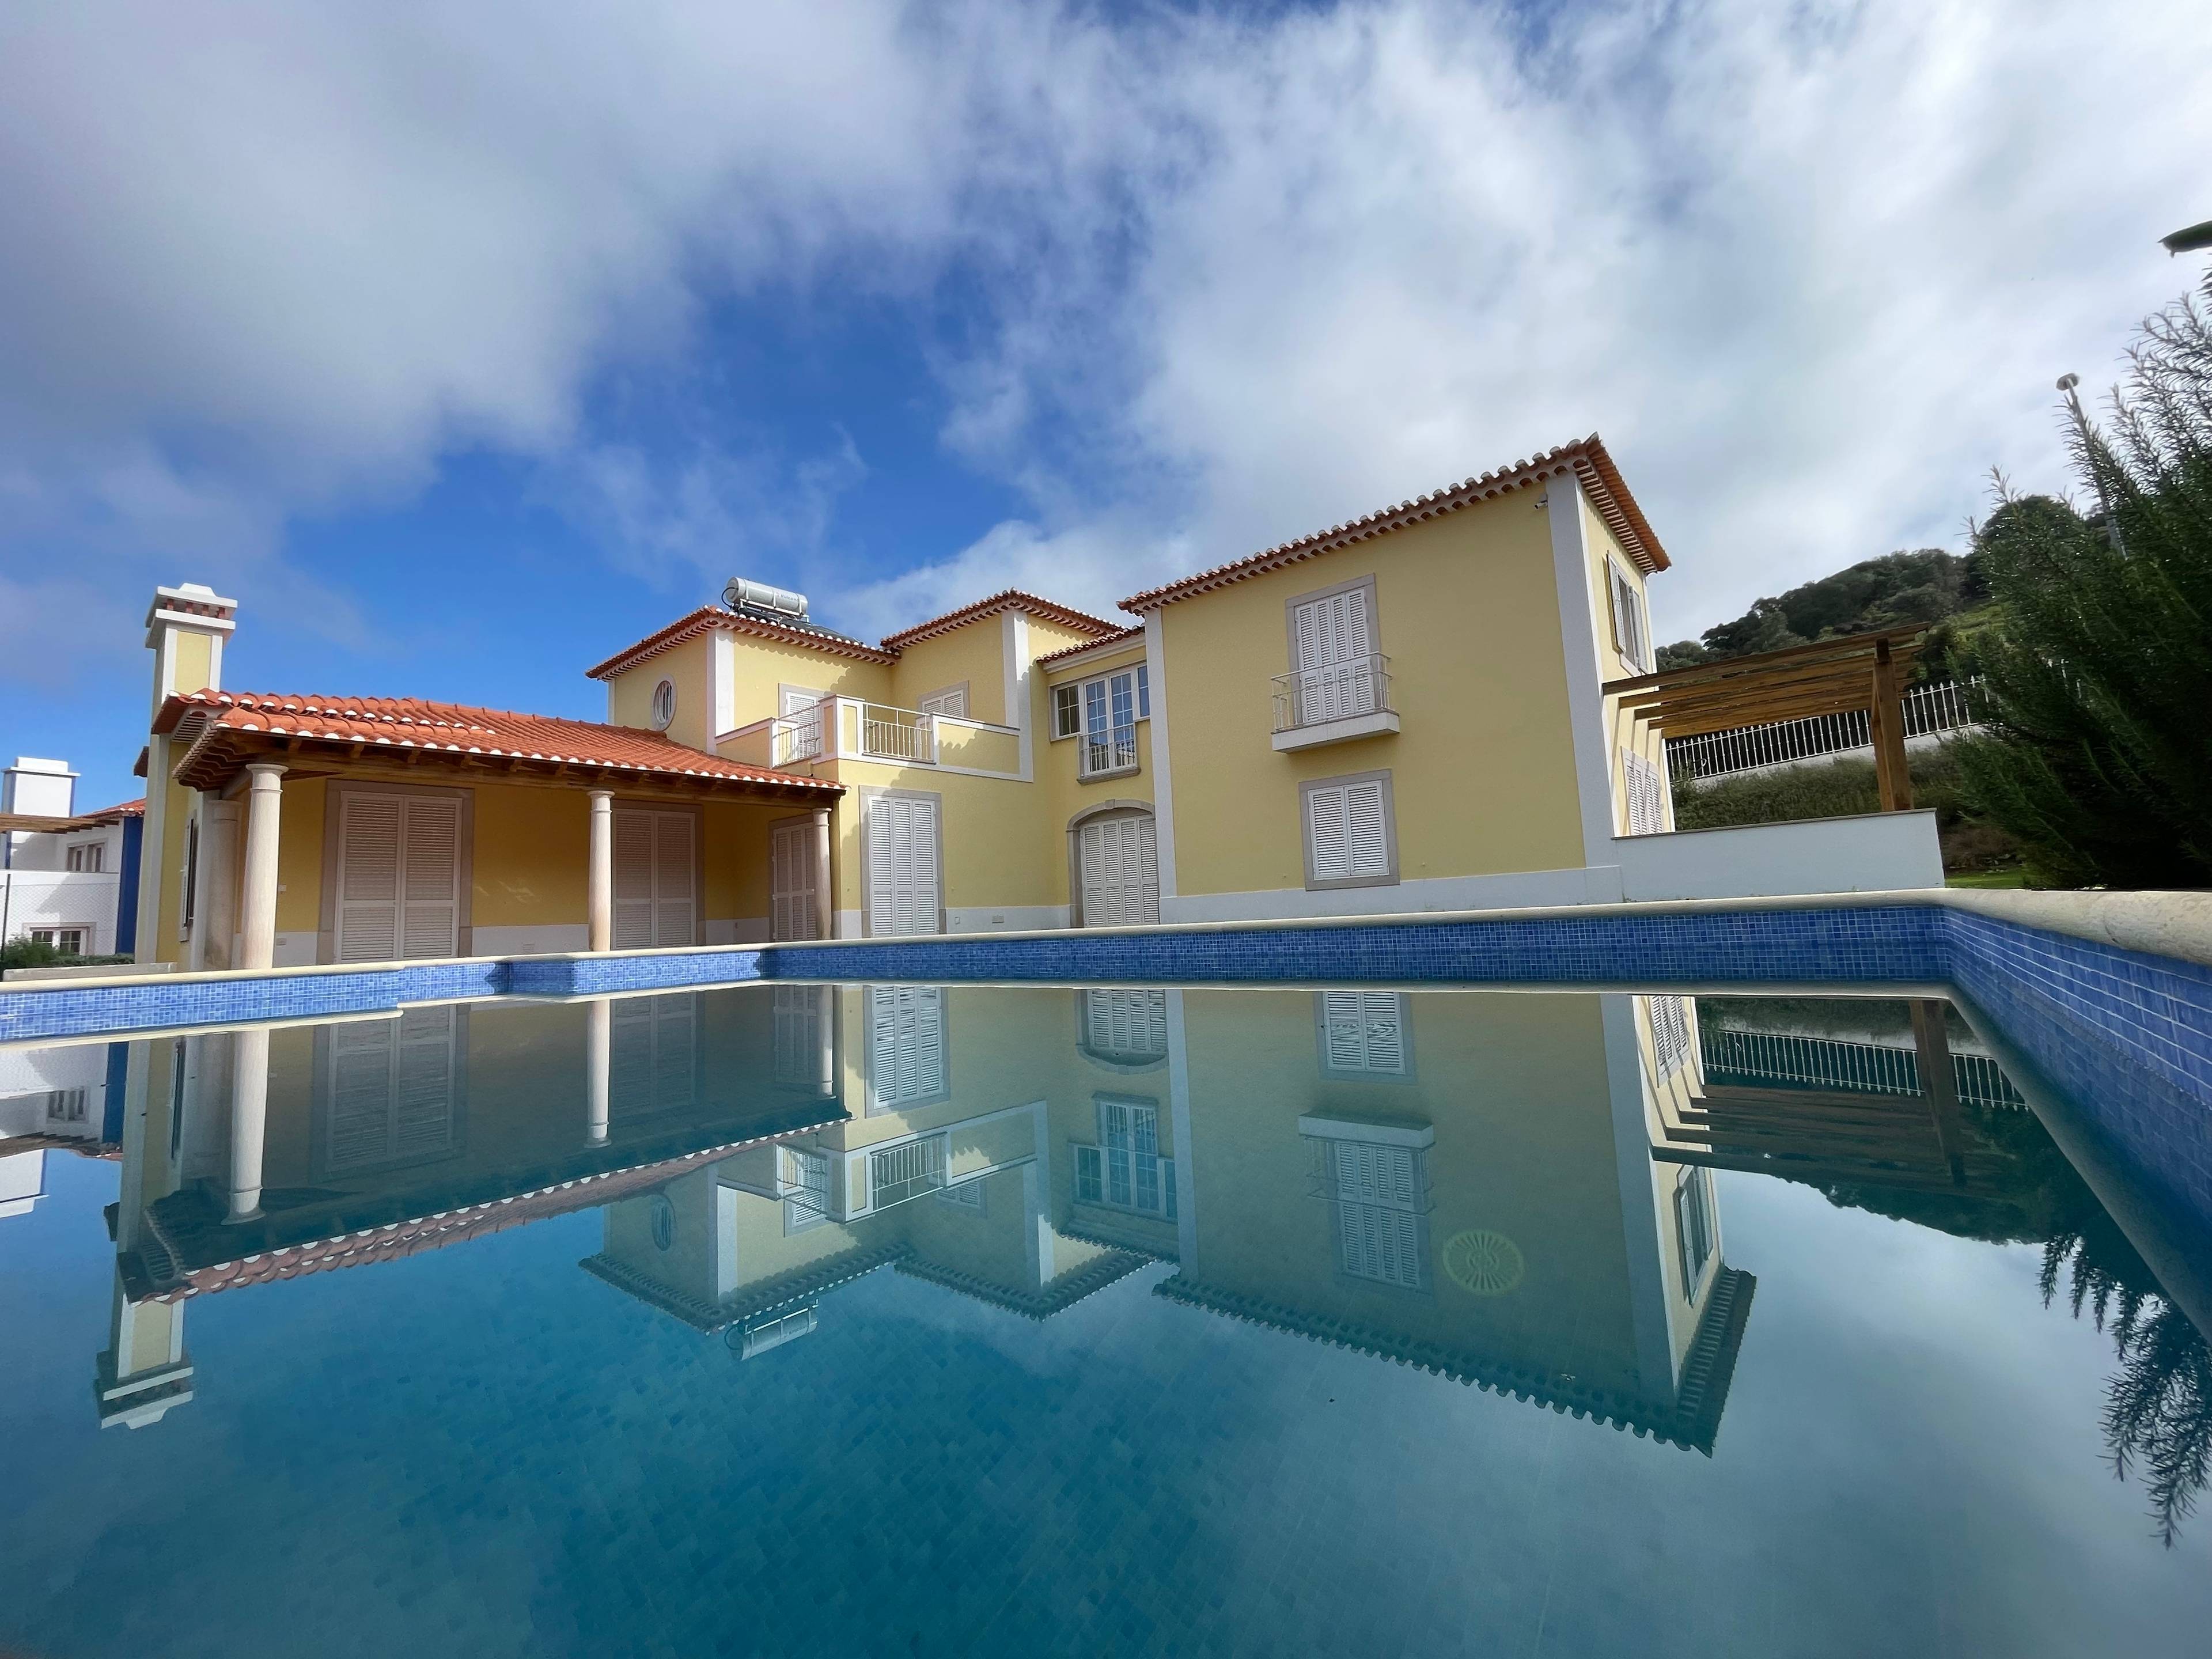 New Villa in historical Sintra